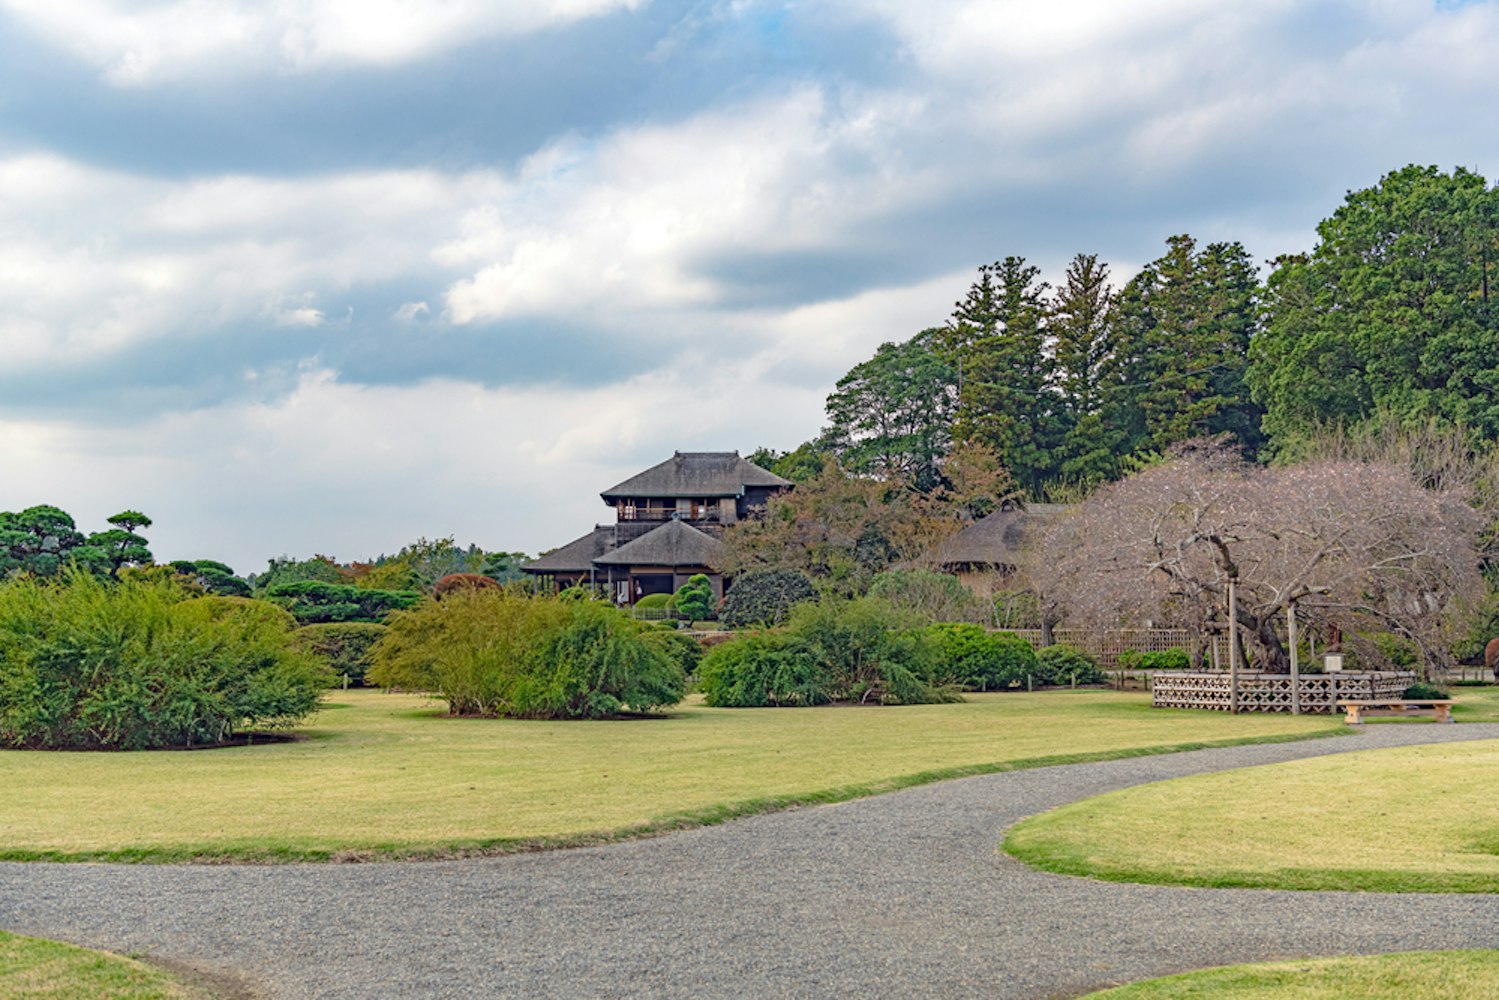 Scenery of the Kairakuen Garden in Mito, Japan